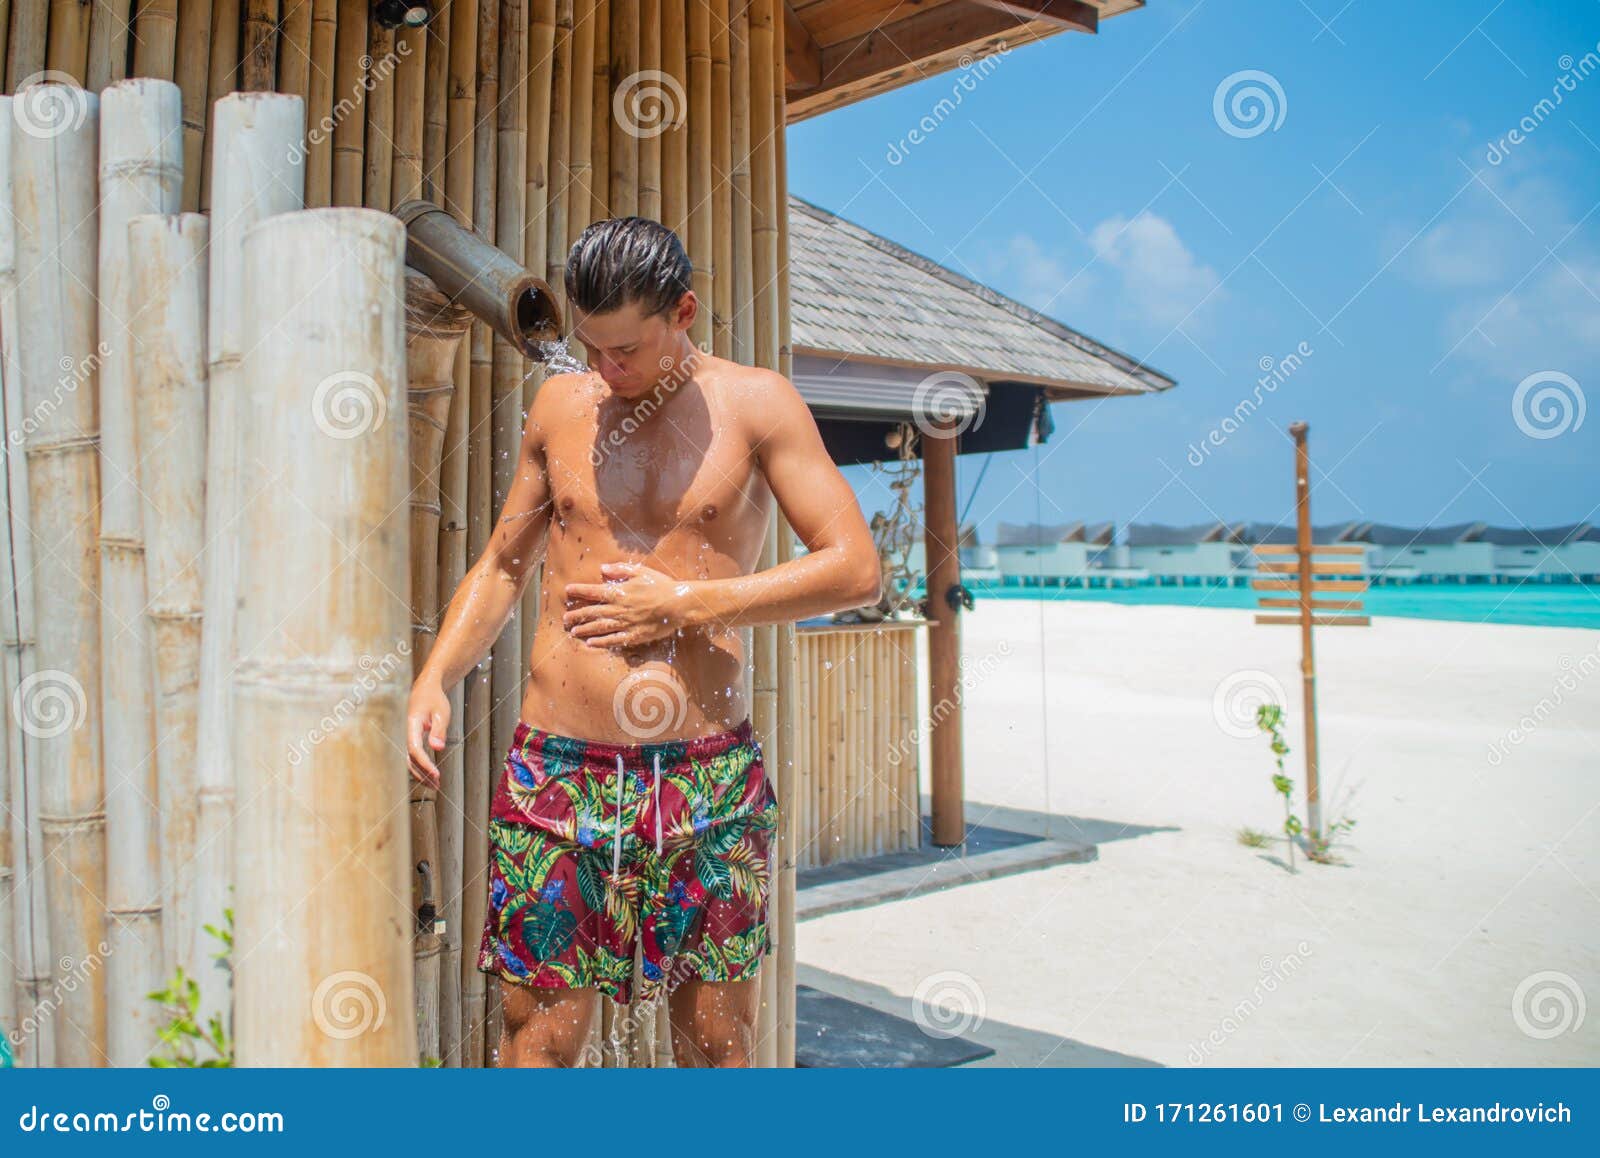 c11 figurine beachboy holiday beach holiday pool man